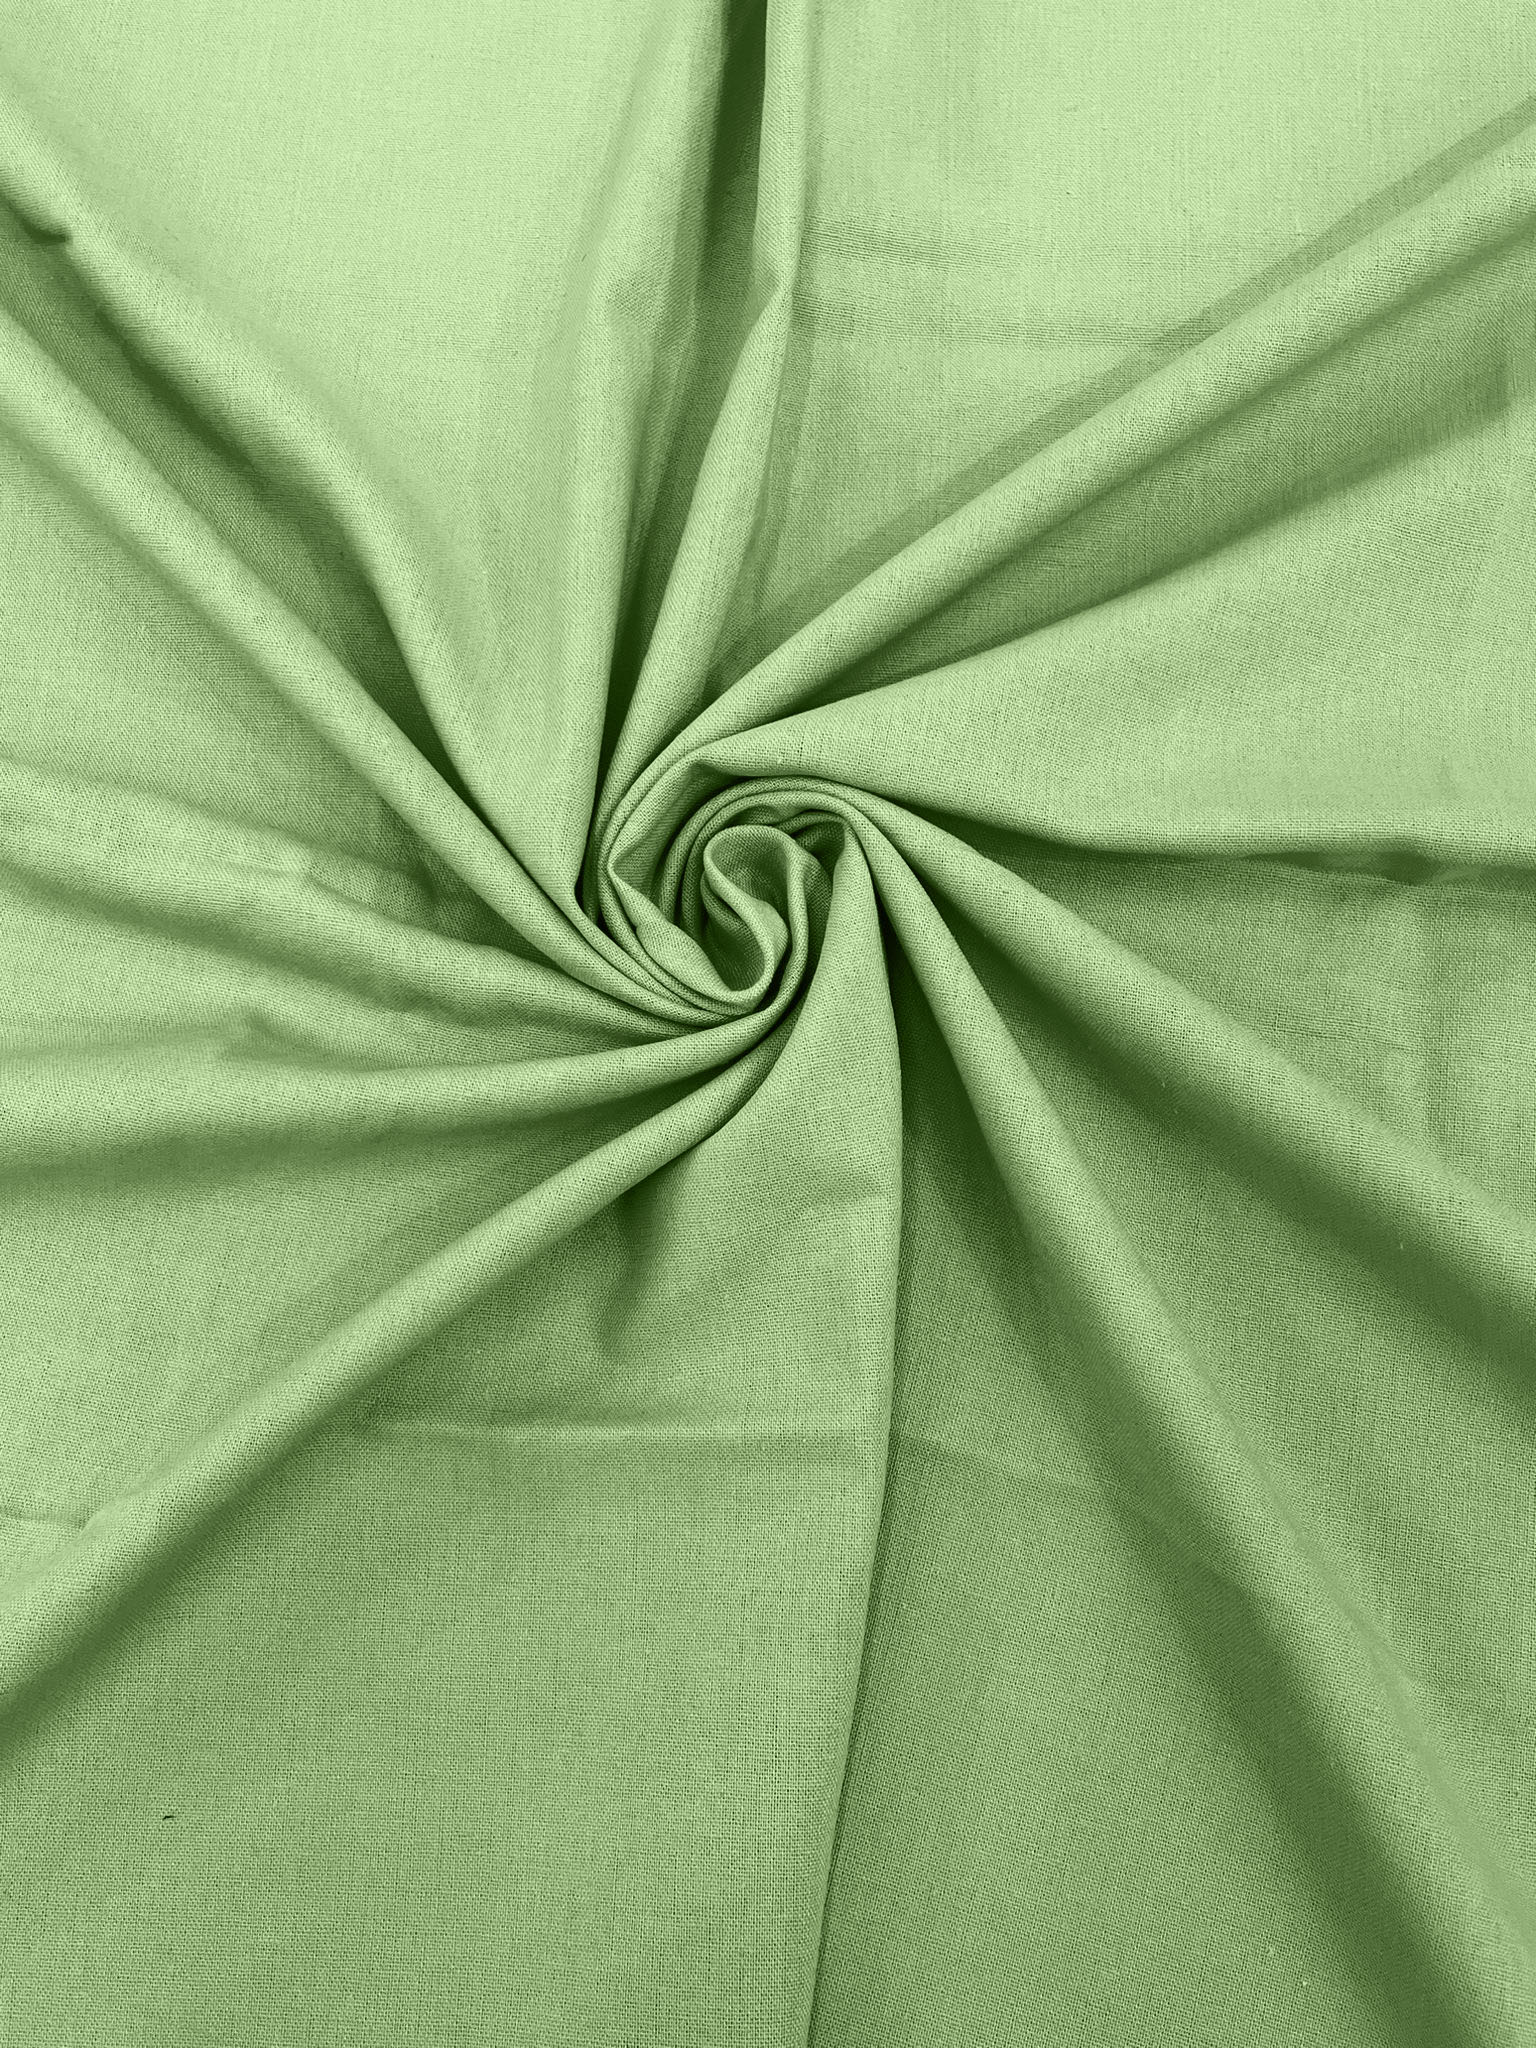 Pistachio Green Medium Weight Natural Linen Fabric/50 " Wide/Clothing